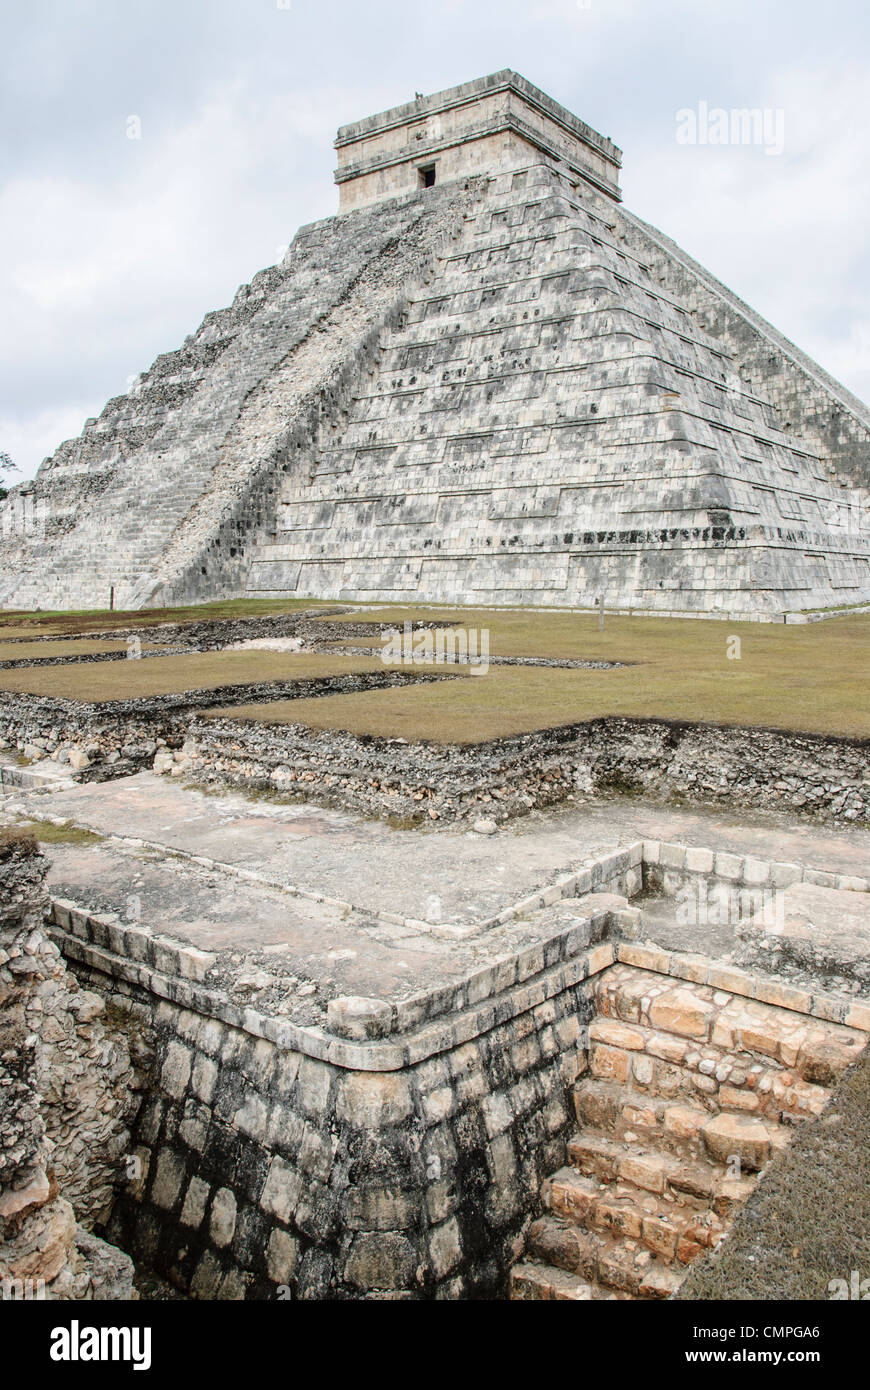 CHICHEN ITZA, Mexico - Excavation in front of the Temple of Kukulkan (El Castillo) at Chichen Itza Archeological Zone, ruins of a major Maya civilization city in the heart of Mexico's Yucatan Peninsula. Stock Photo